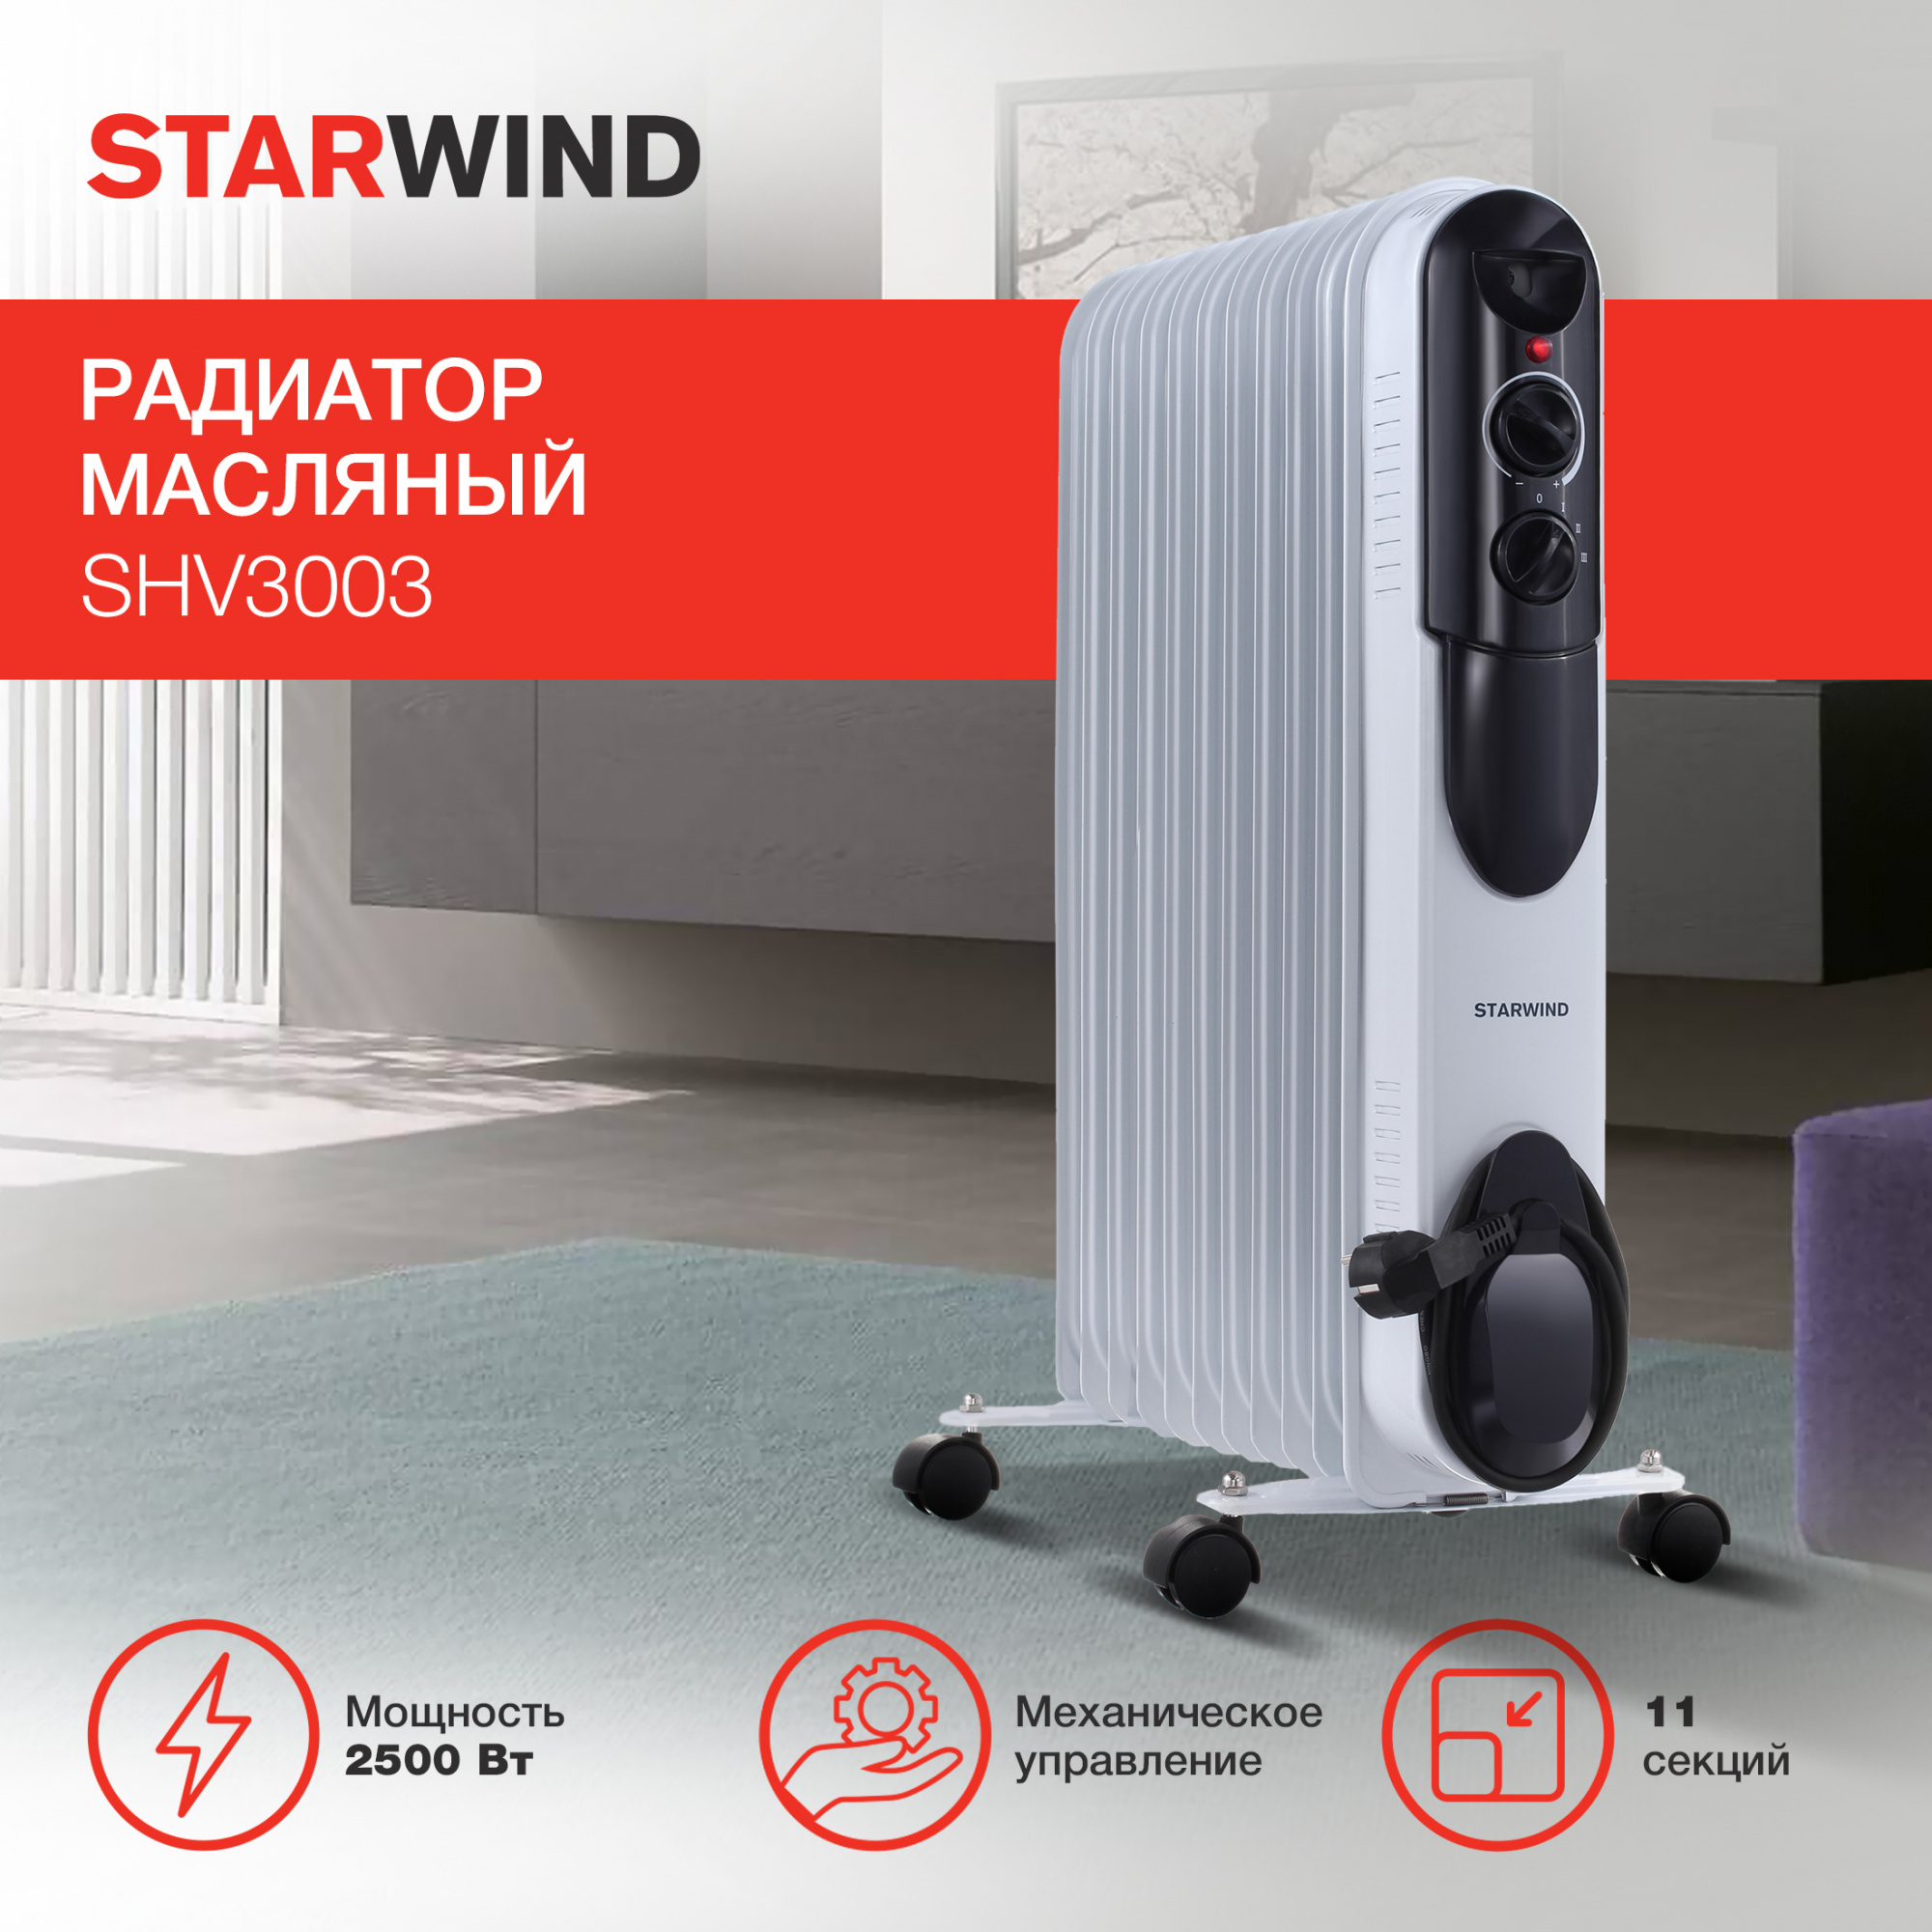 Масляный радиатор Starwind SHV3003 белый от магазина Старвинд